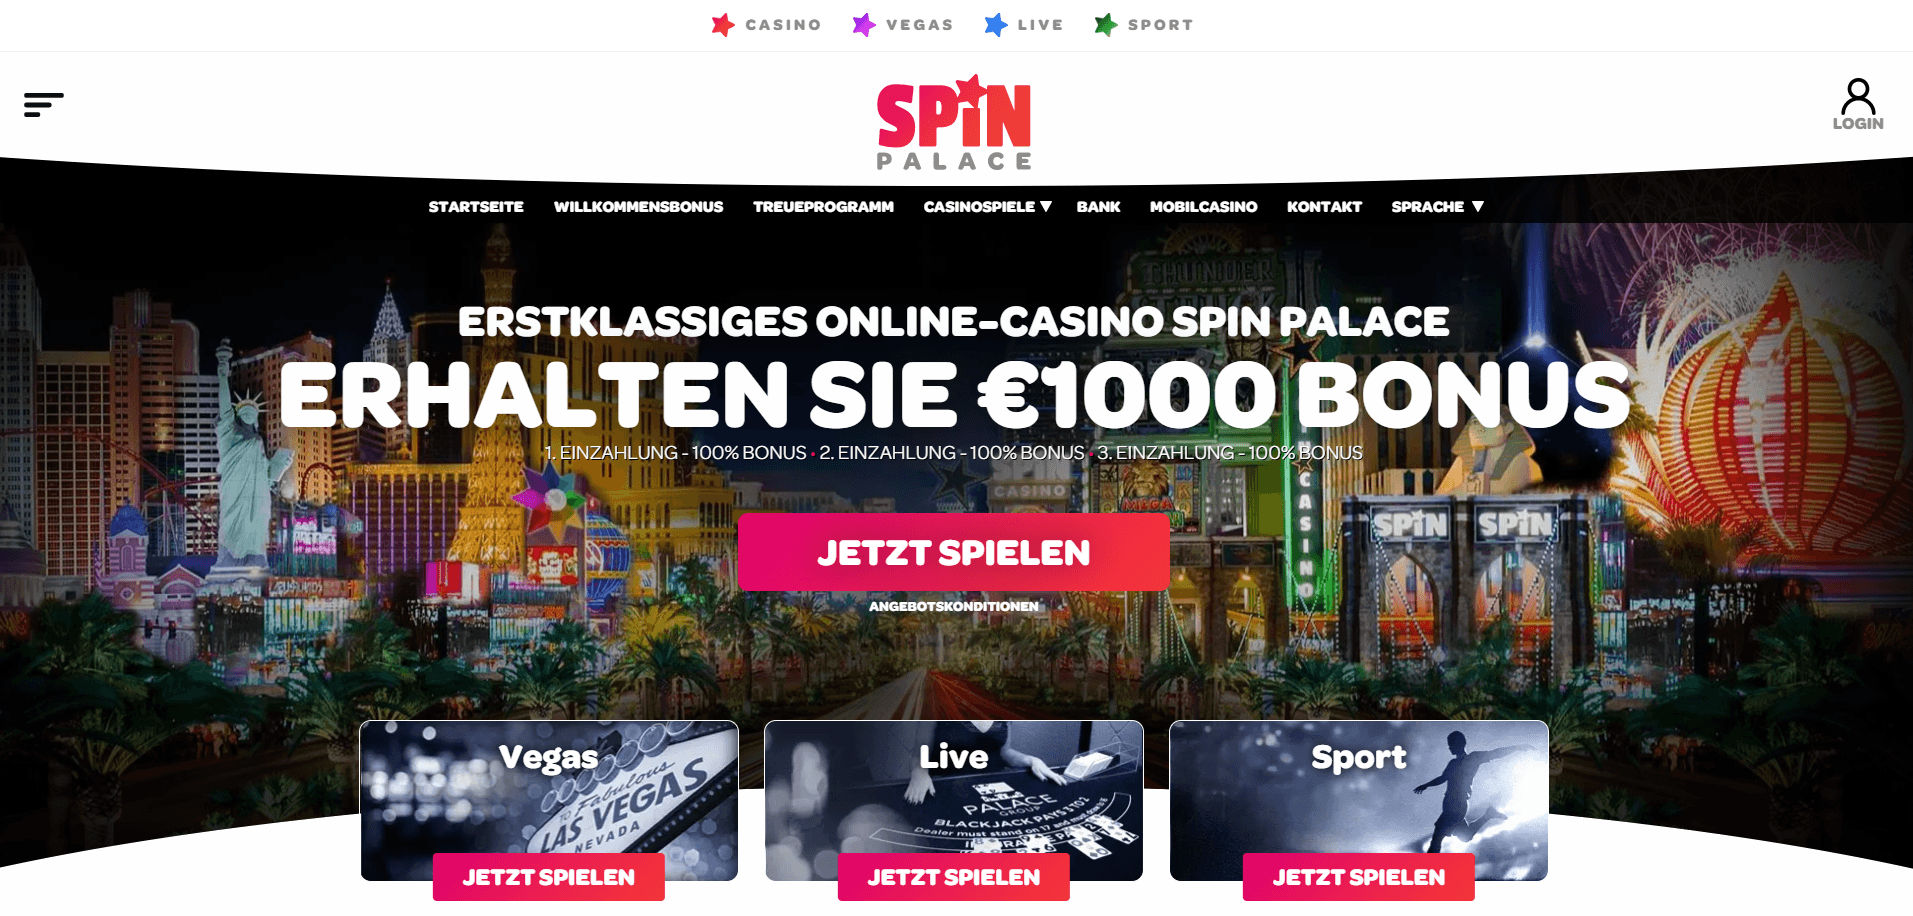 Die Homepage des Spin Palace Casinos